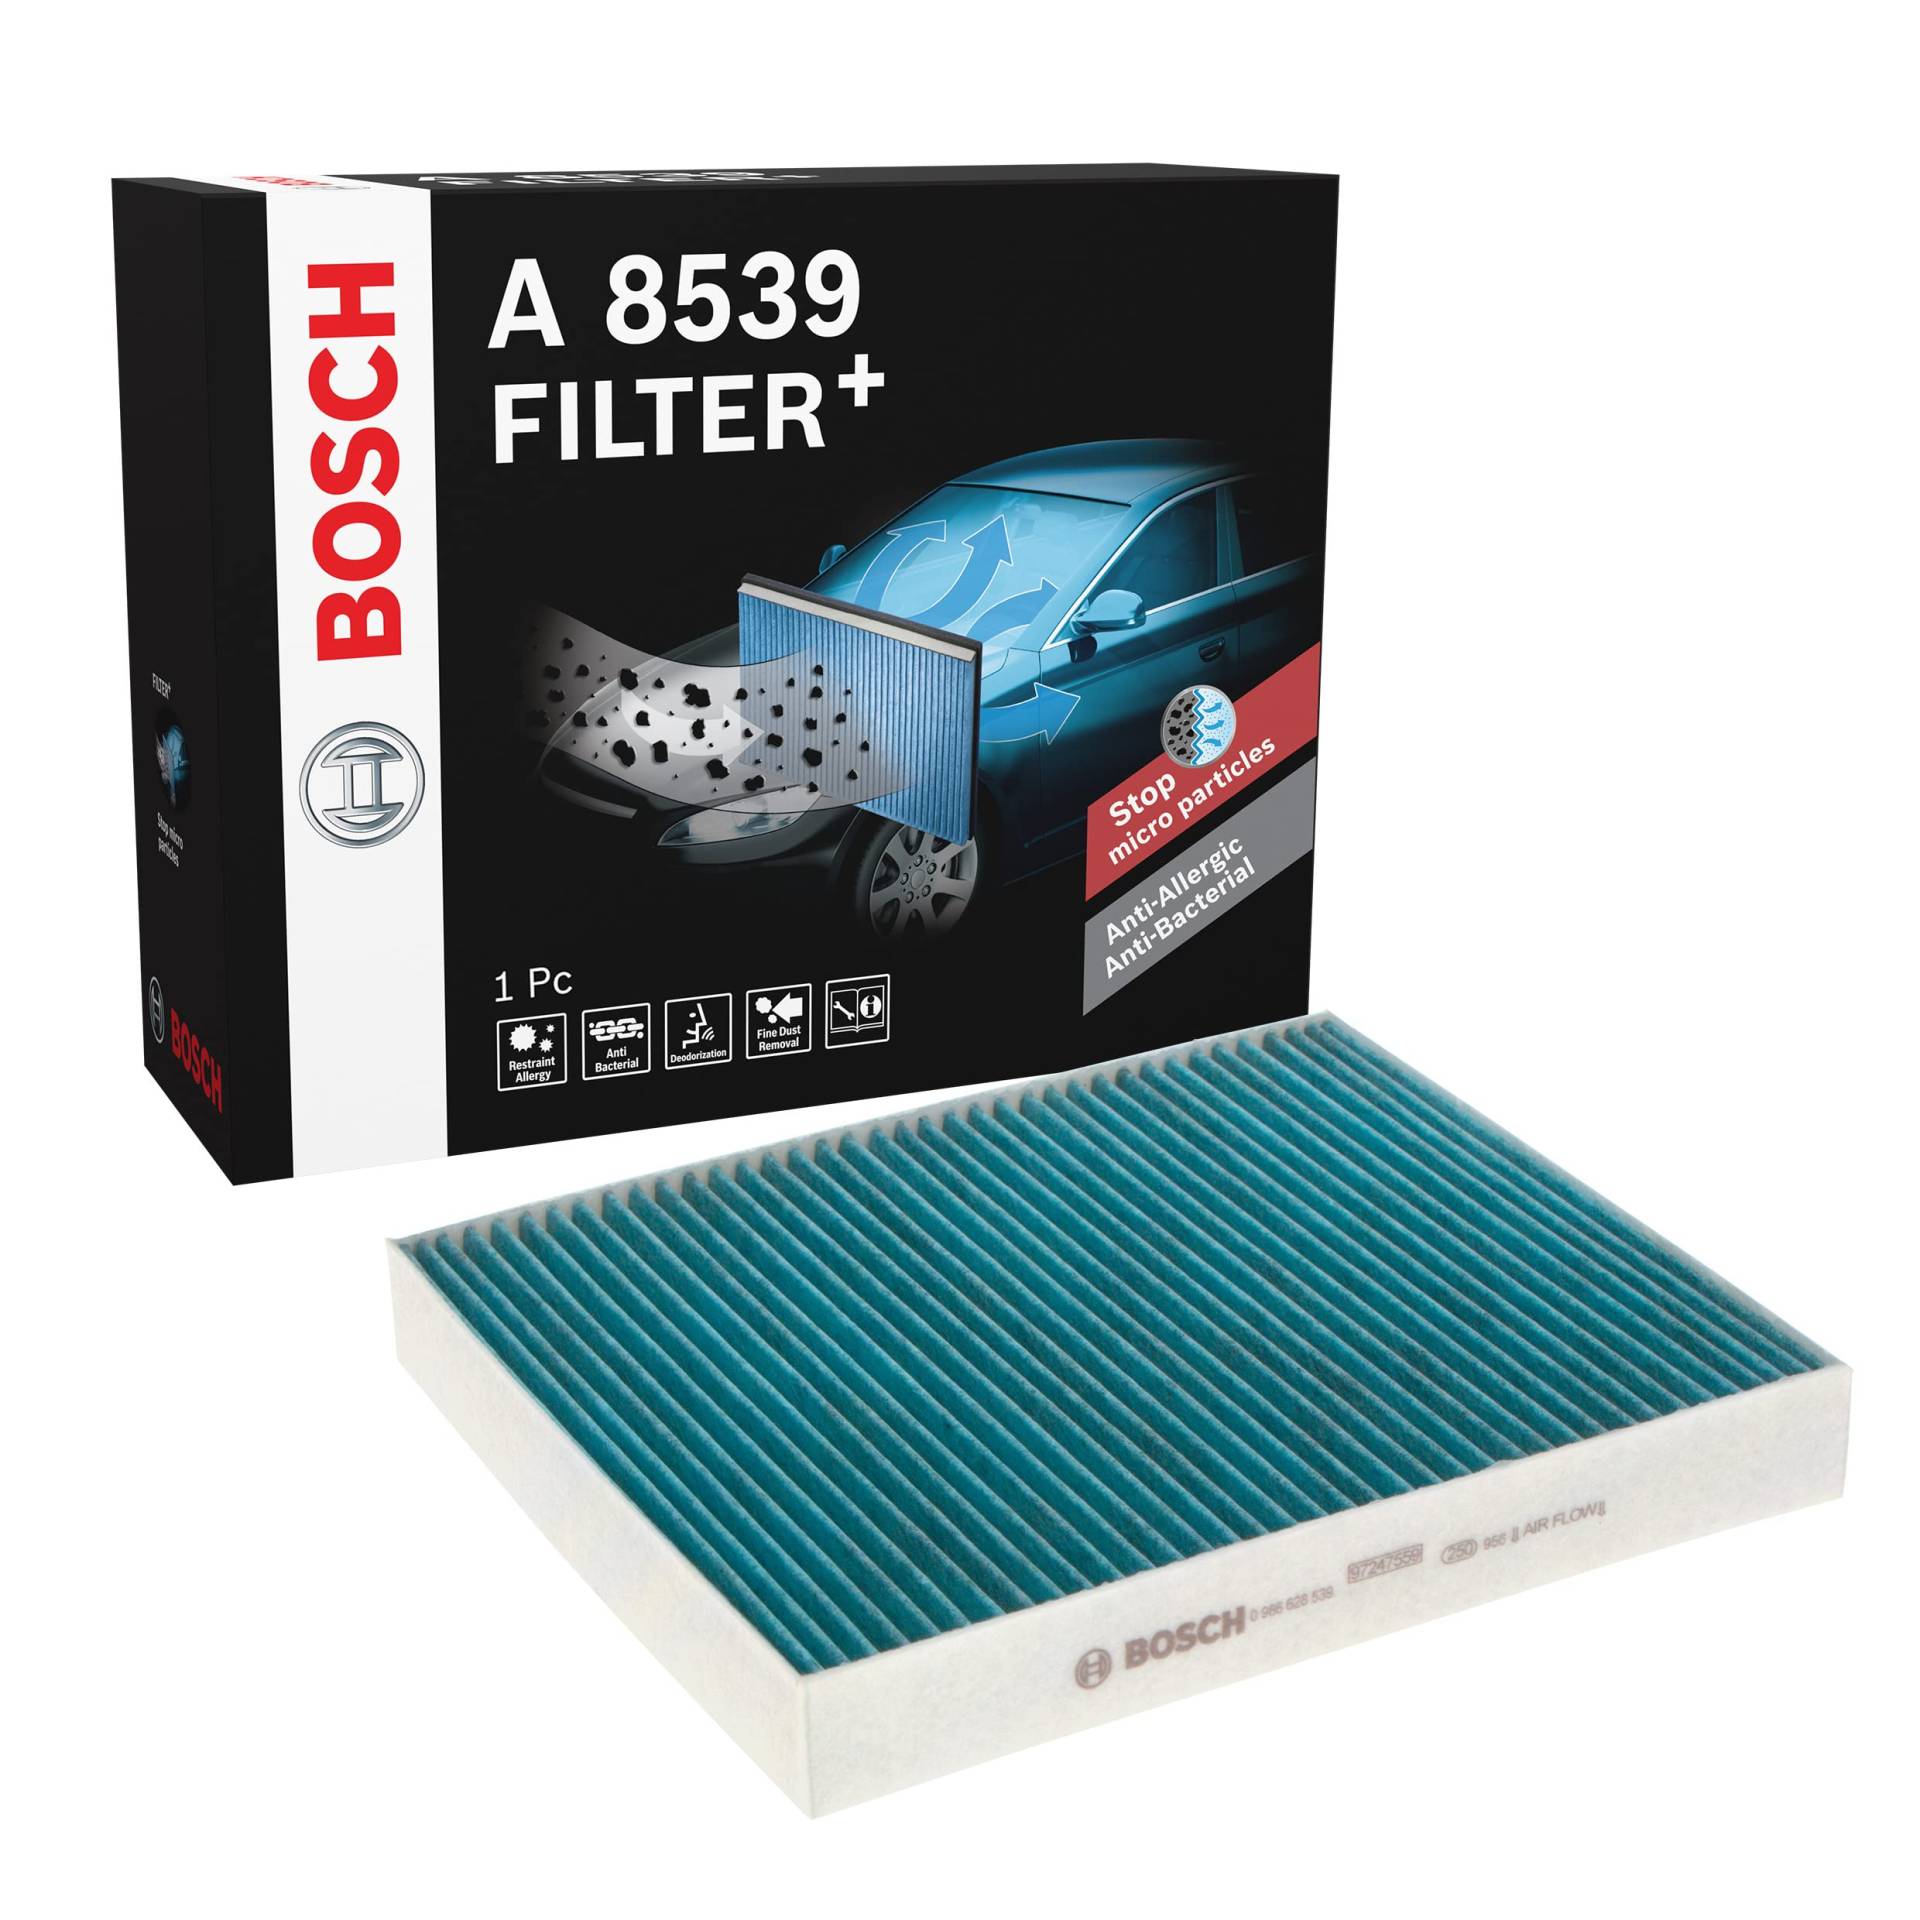 Bosch A8539 - Innenraumfilter Filter+ von Bosch Automotive